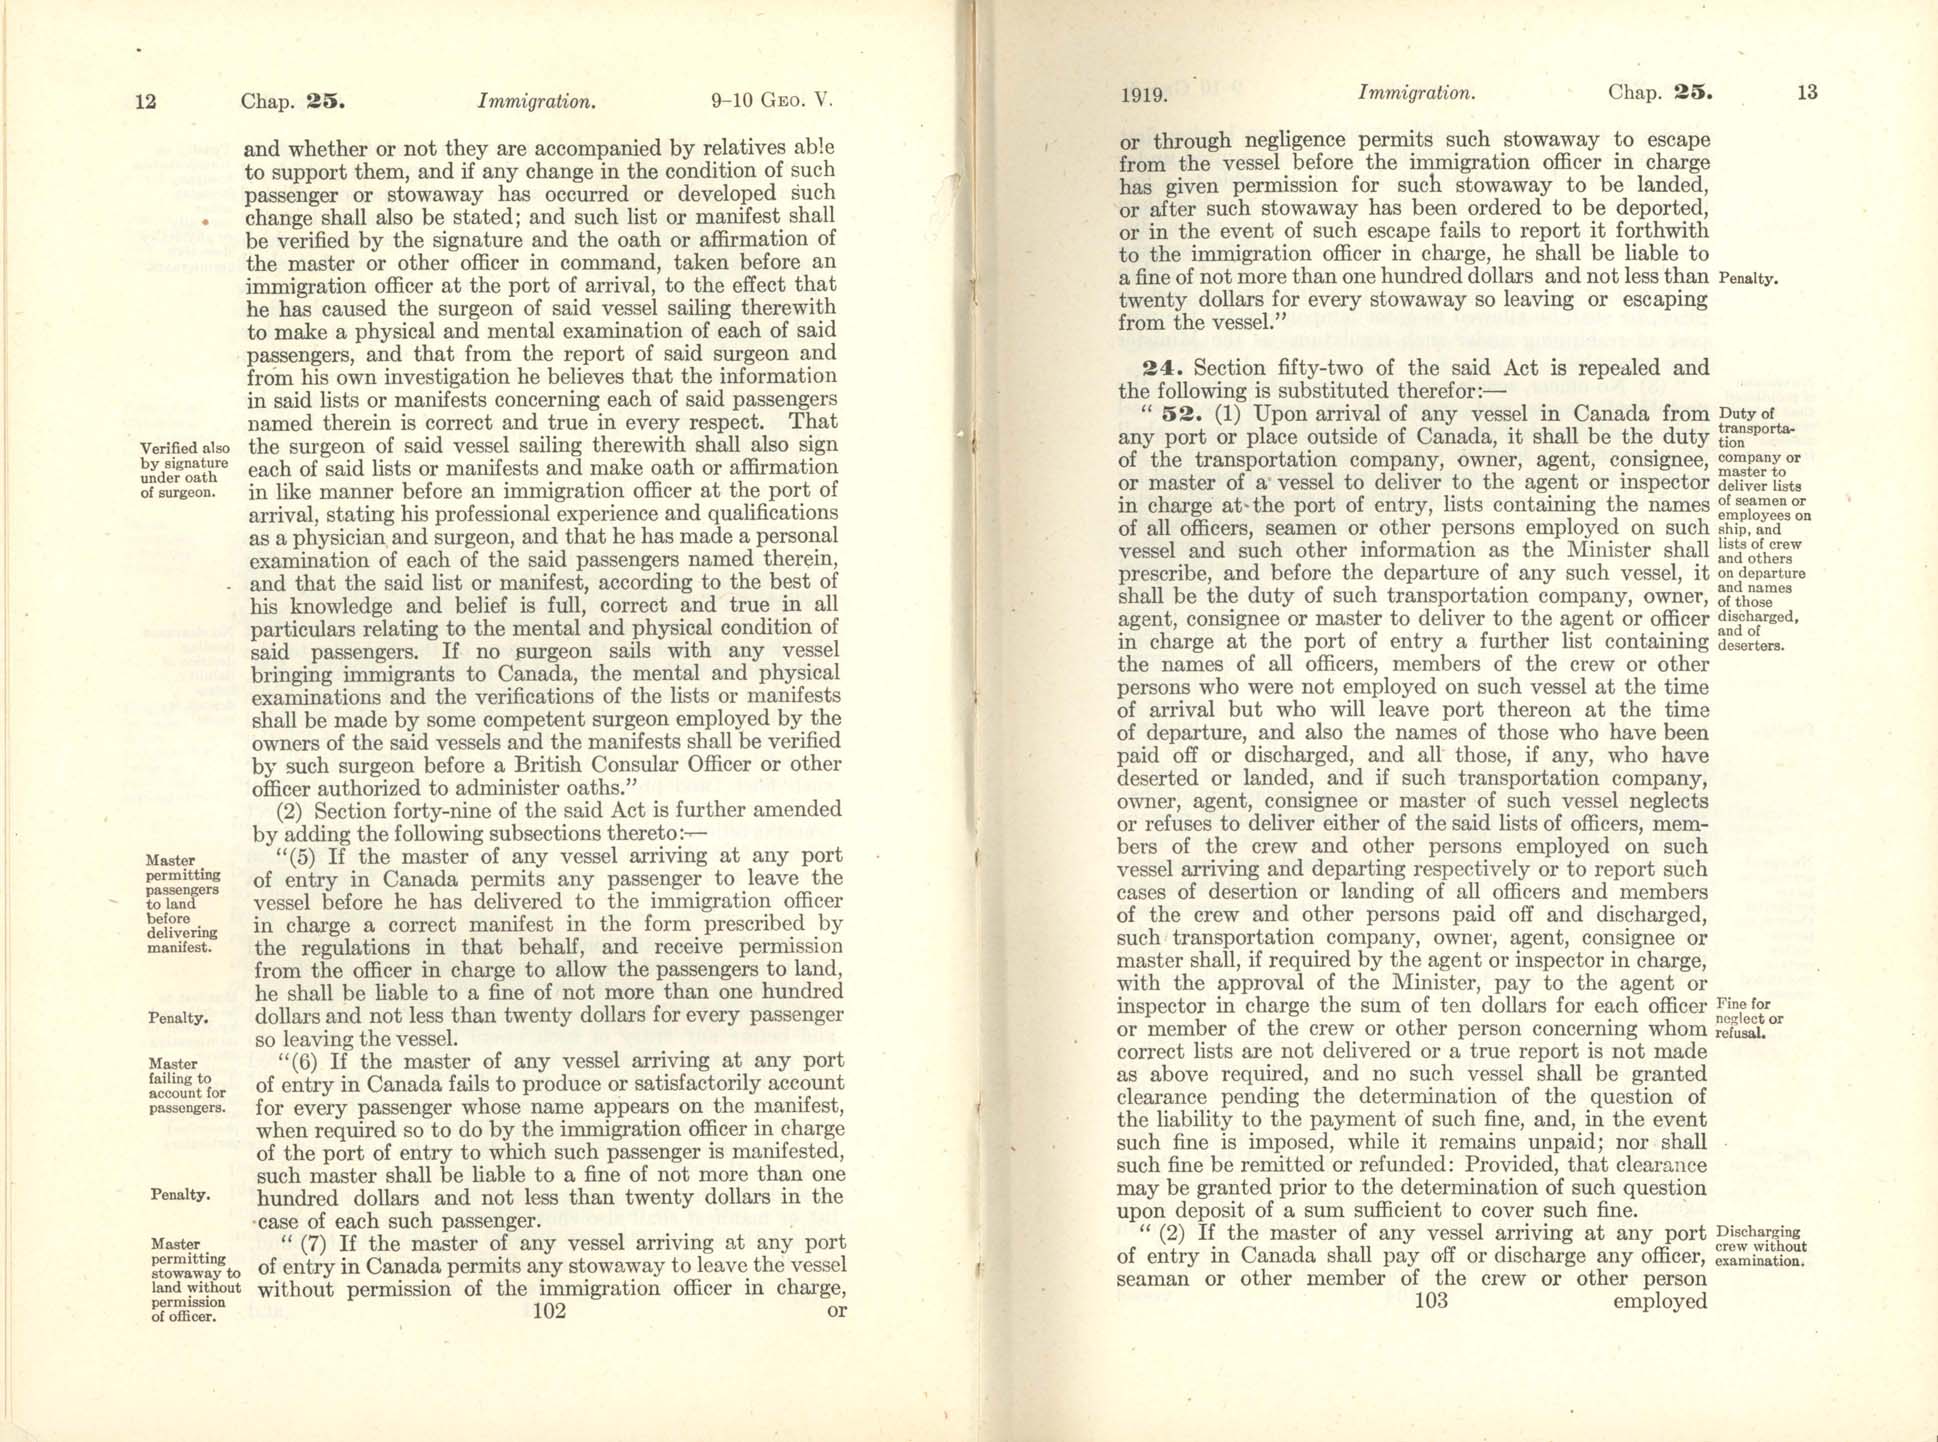 Page 102, 103 Immigration Act Amendment, 1919